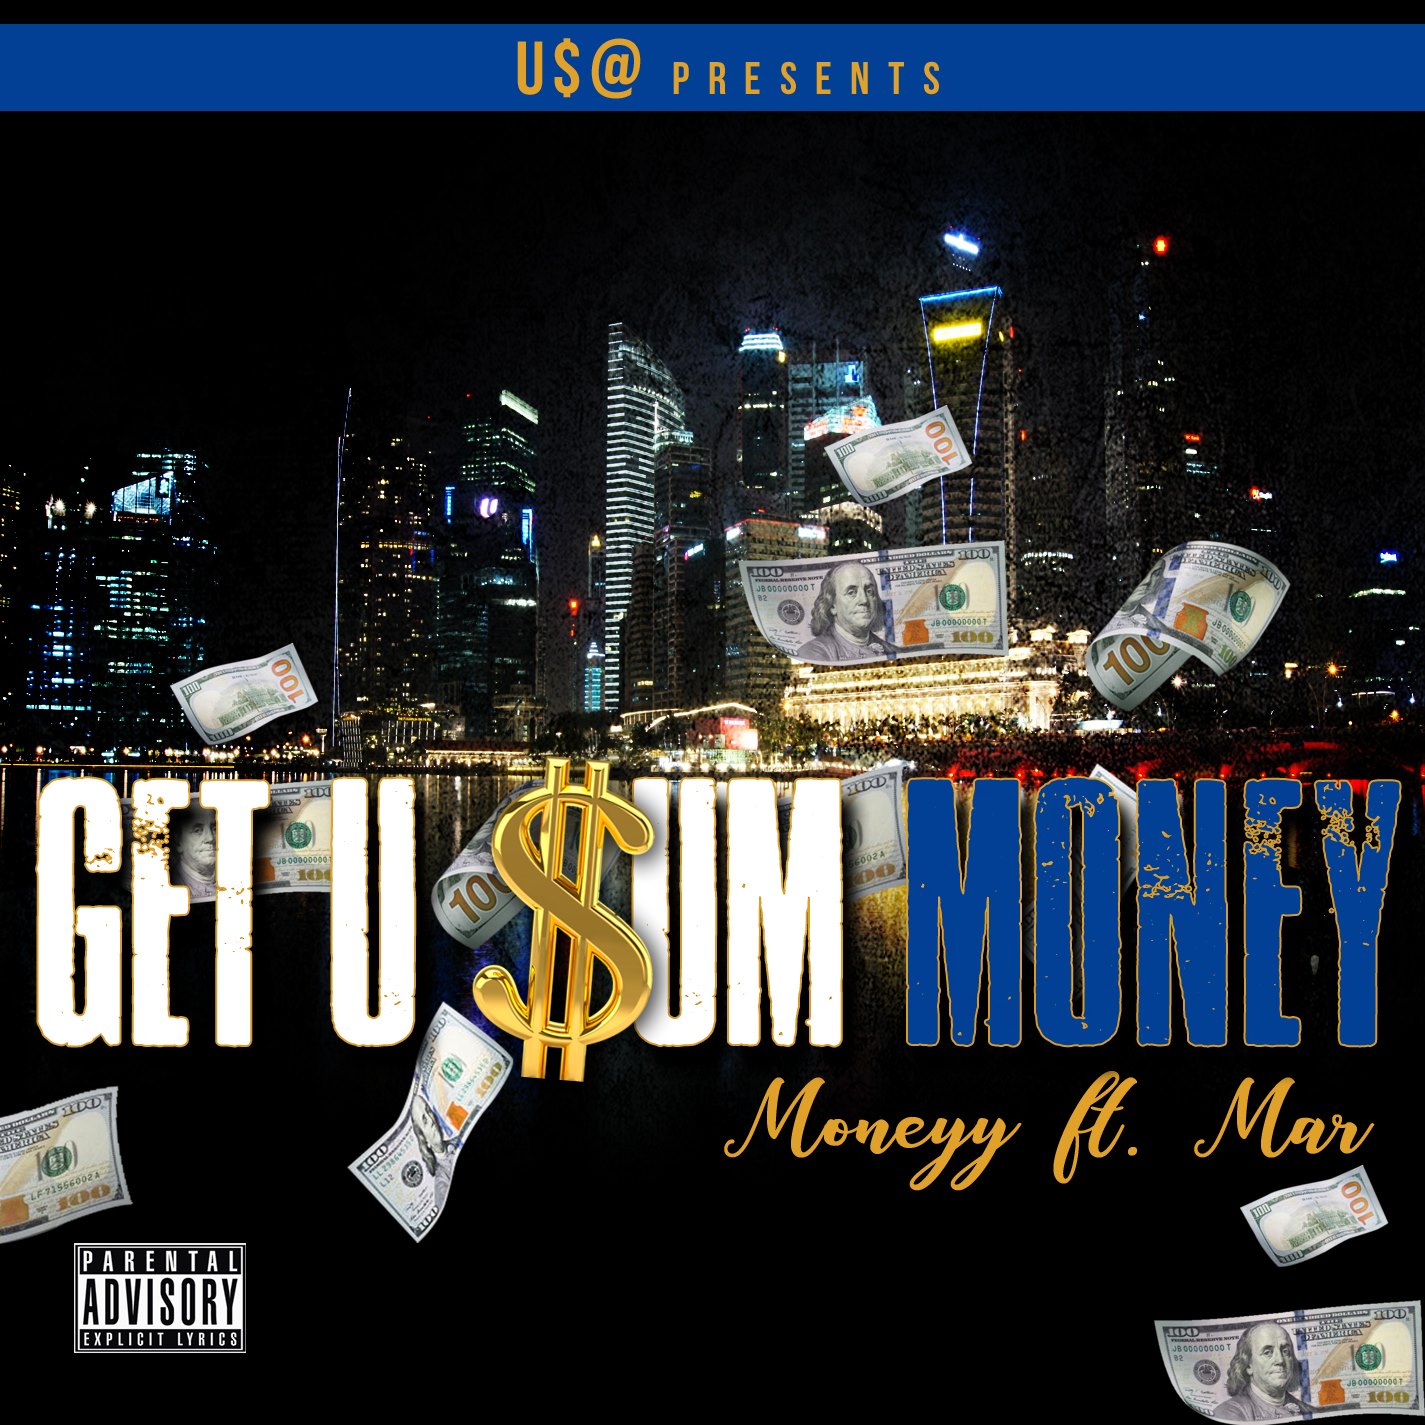 Alabama artist Money is back with his artist Mar for new single “Get U Sum Money” @k.o.b1640